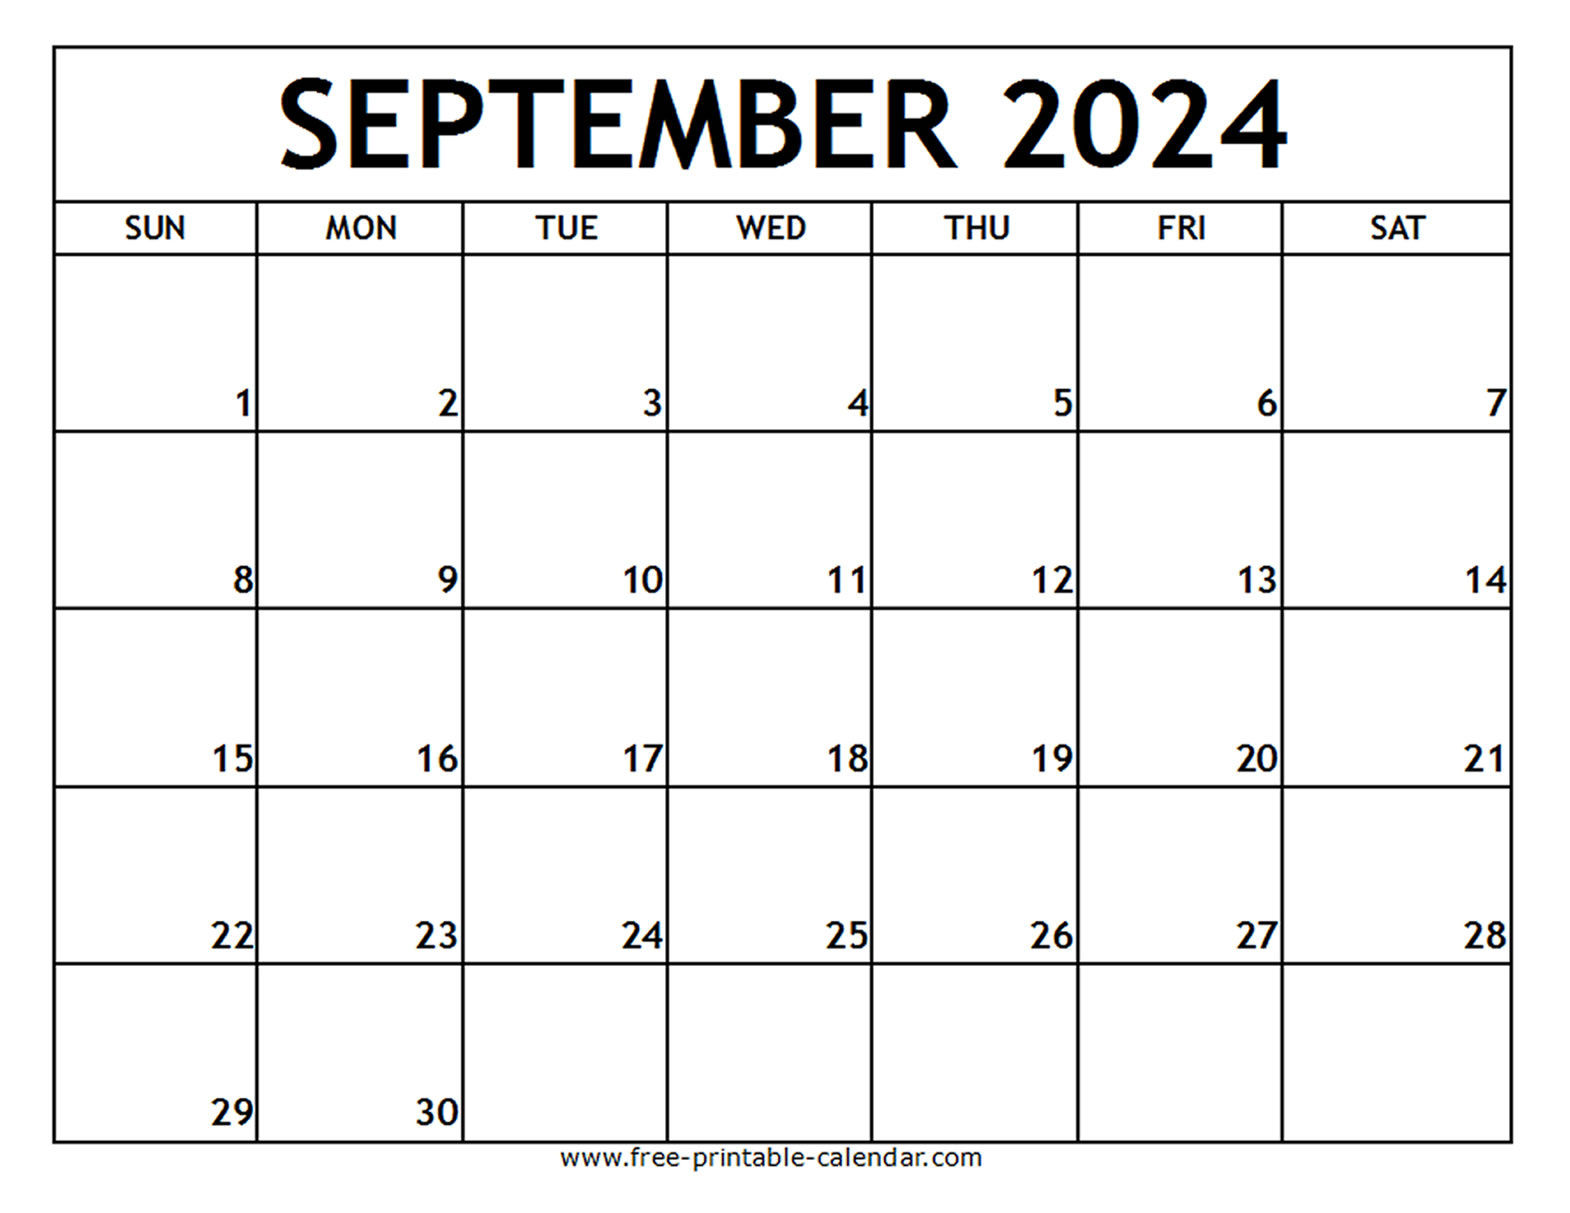 September 2024 Printable Calendar - Free-Printable-Calendar within Free Printable Blank September 2024 Calendar